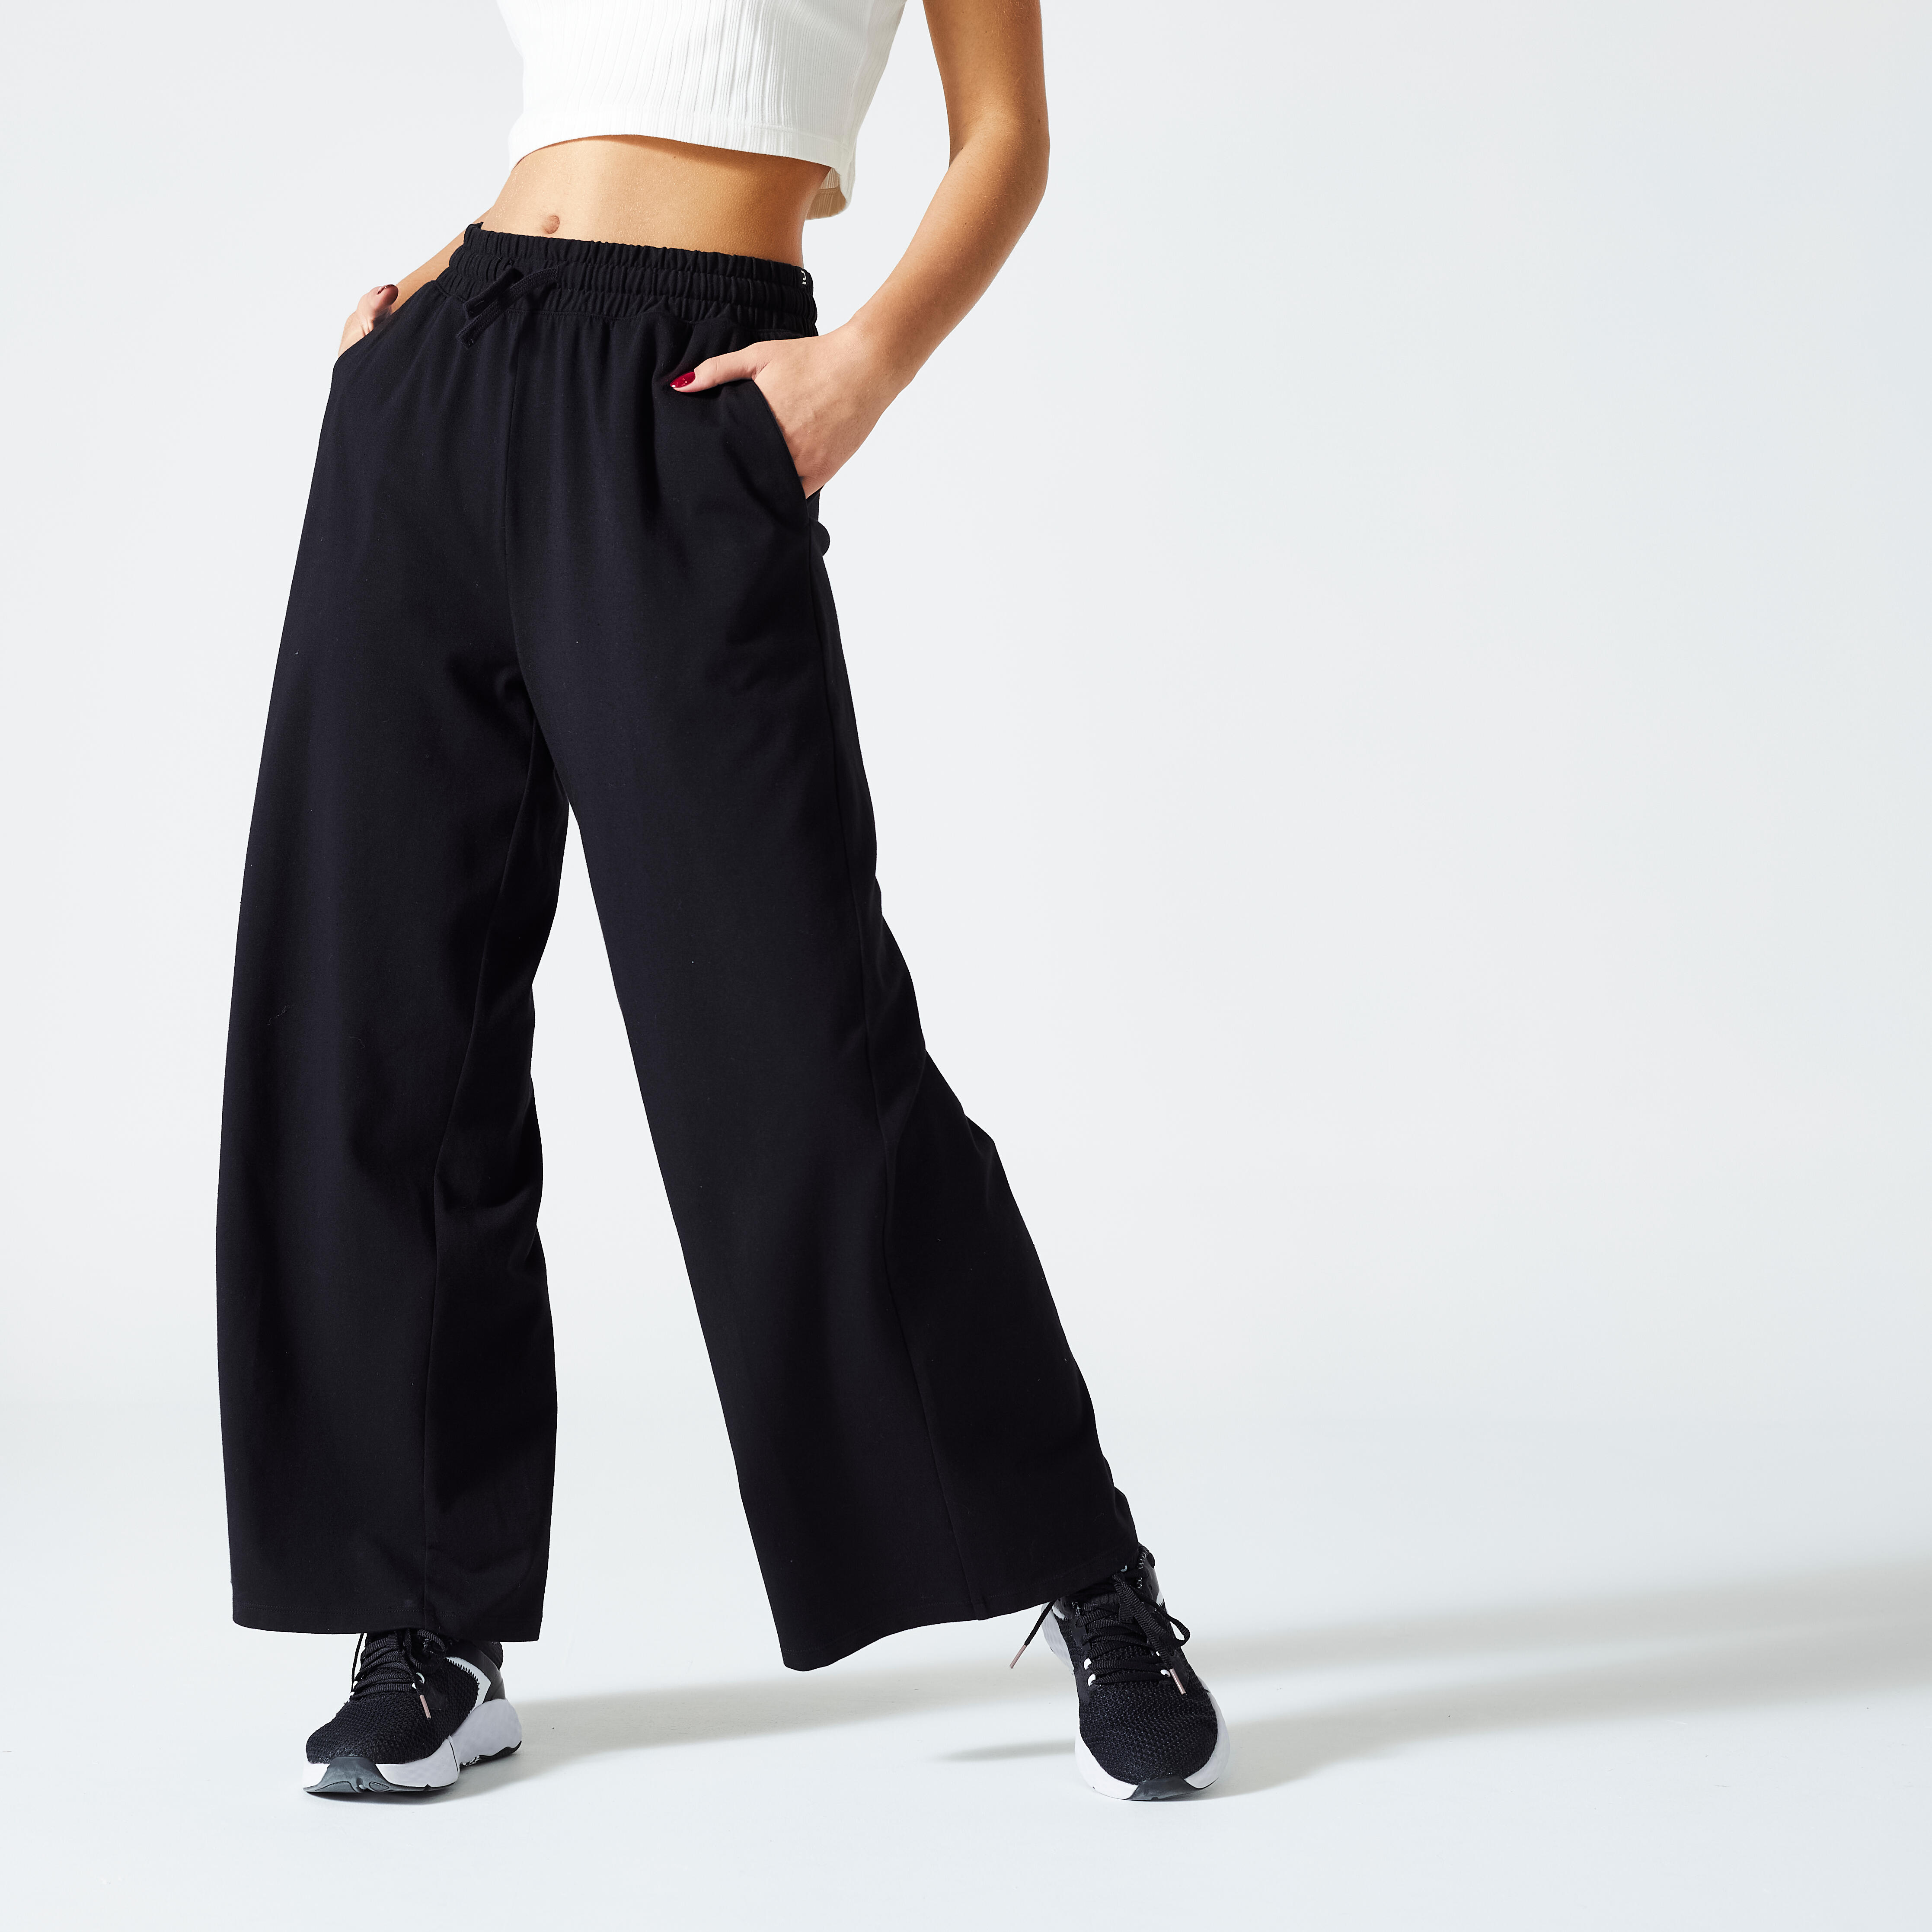 Women's straight cut cotton fitness jogging pants without pocket - 120 black